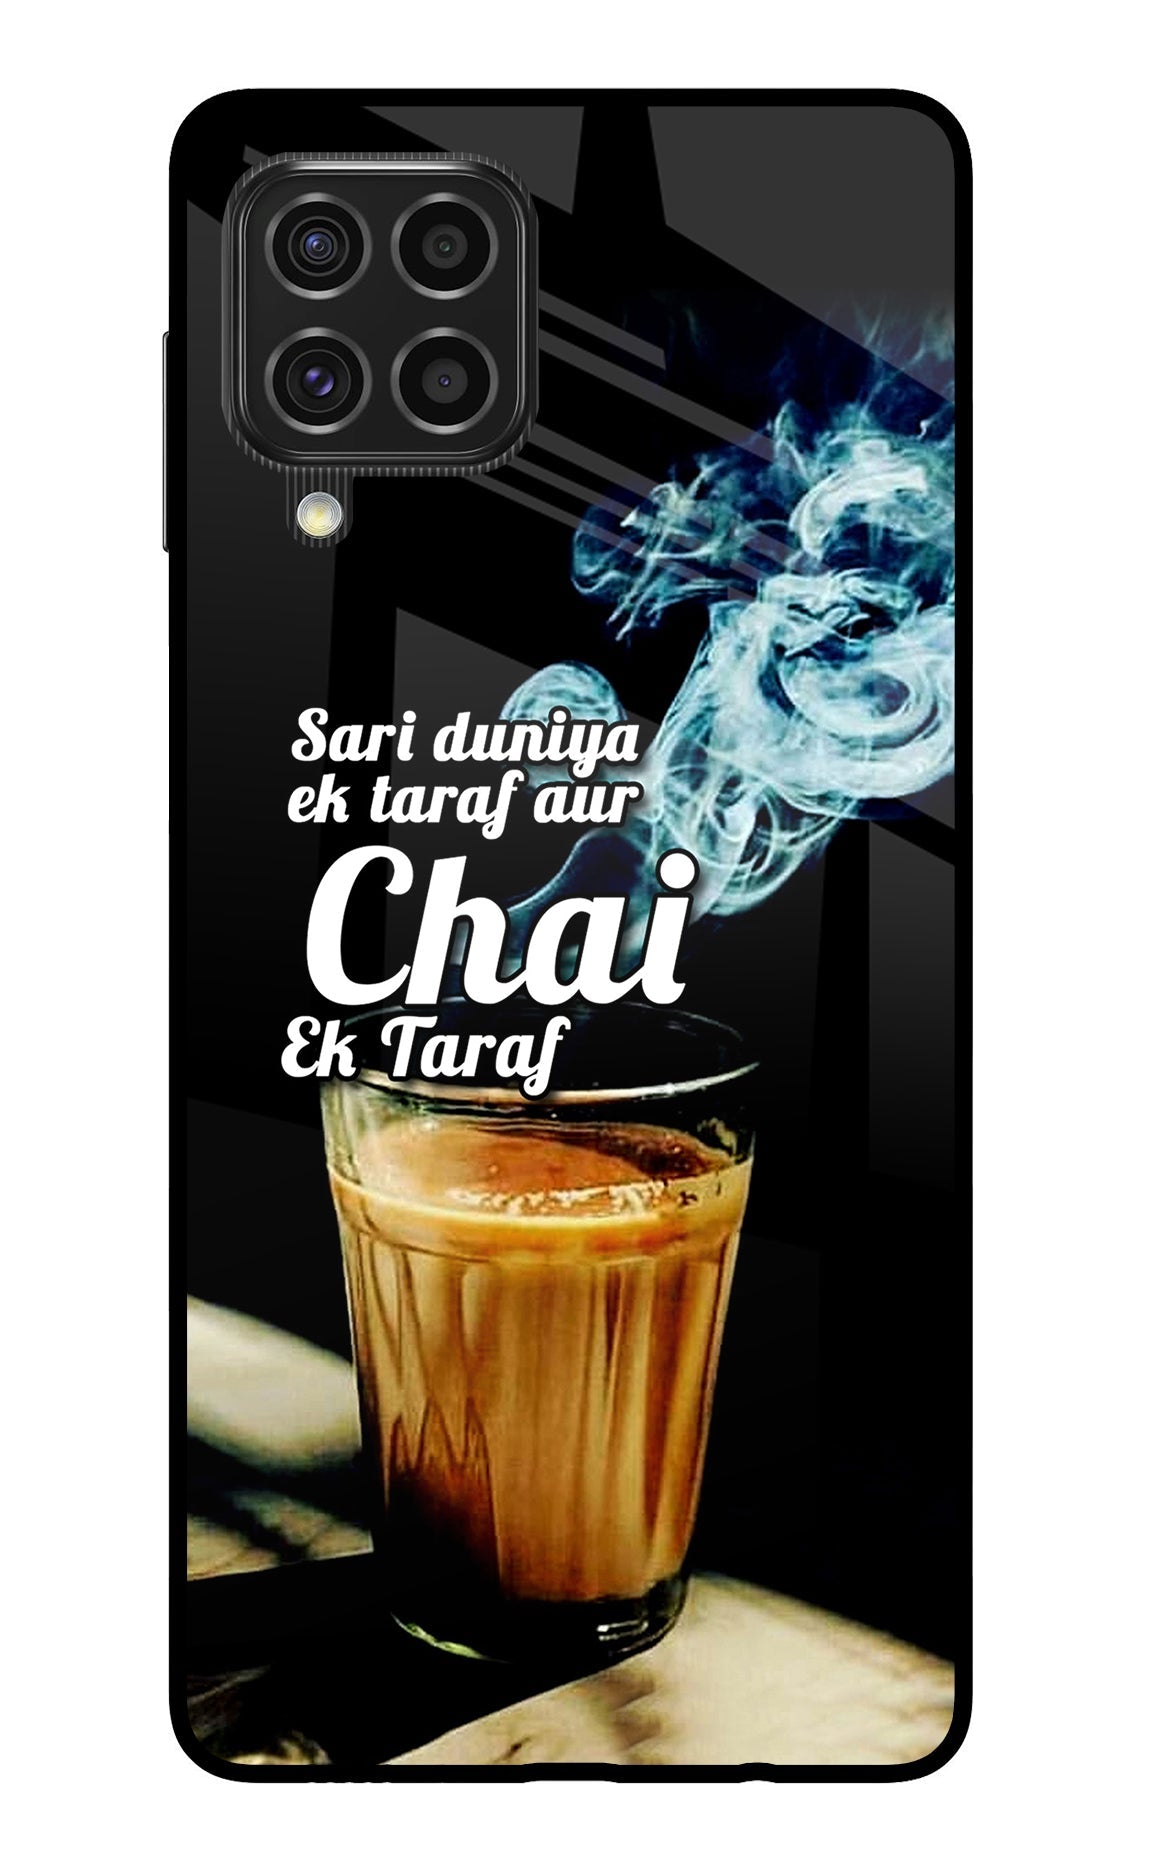 Chai Ek Taraf Quote Samsung F62 Glass Case